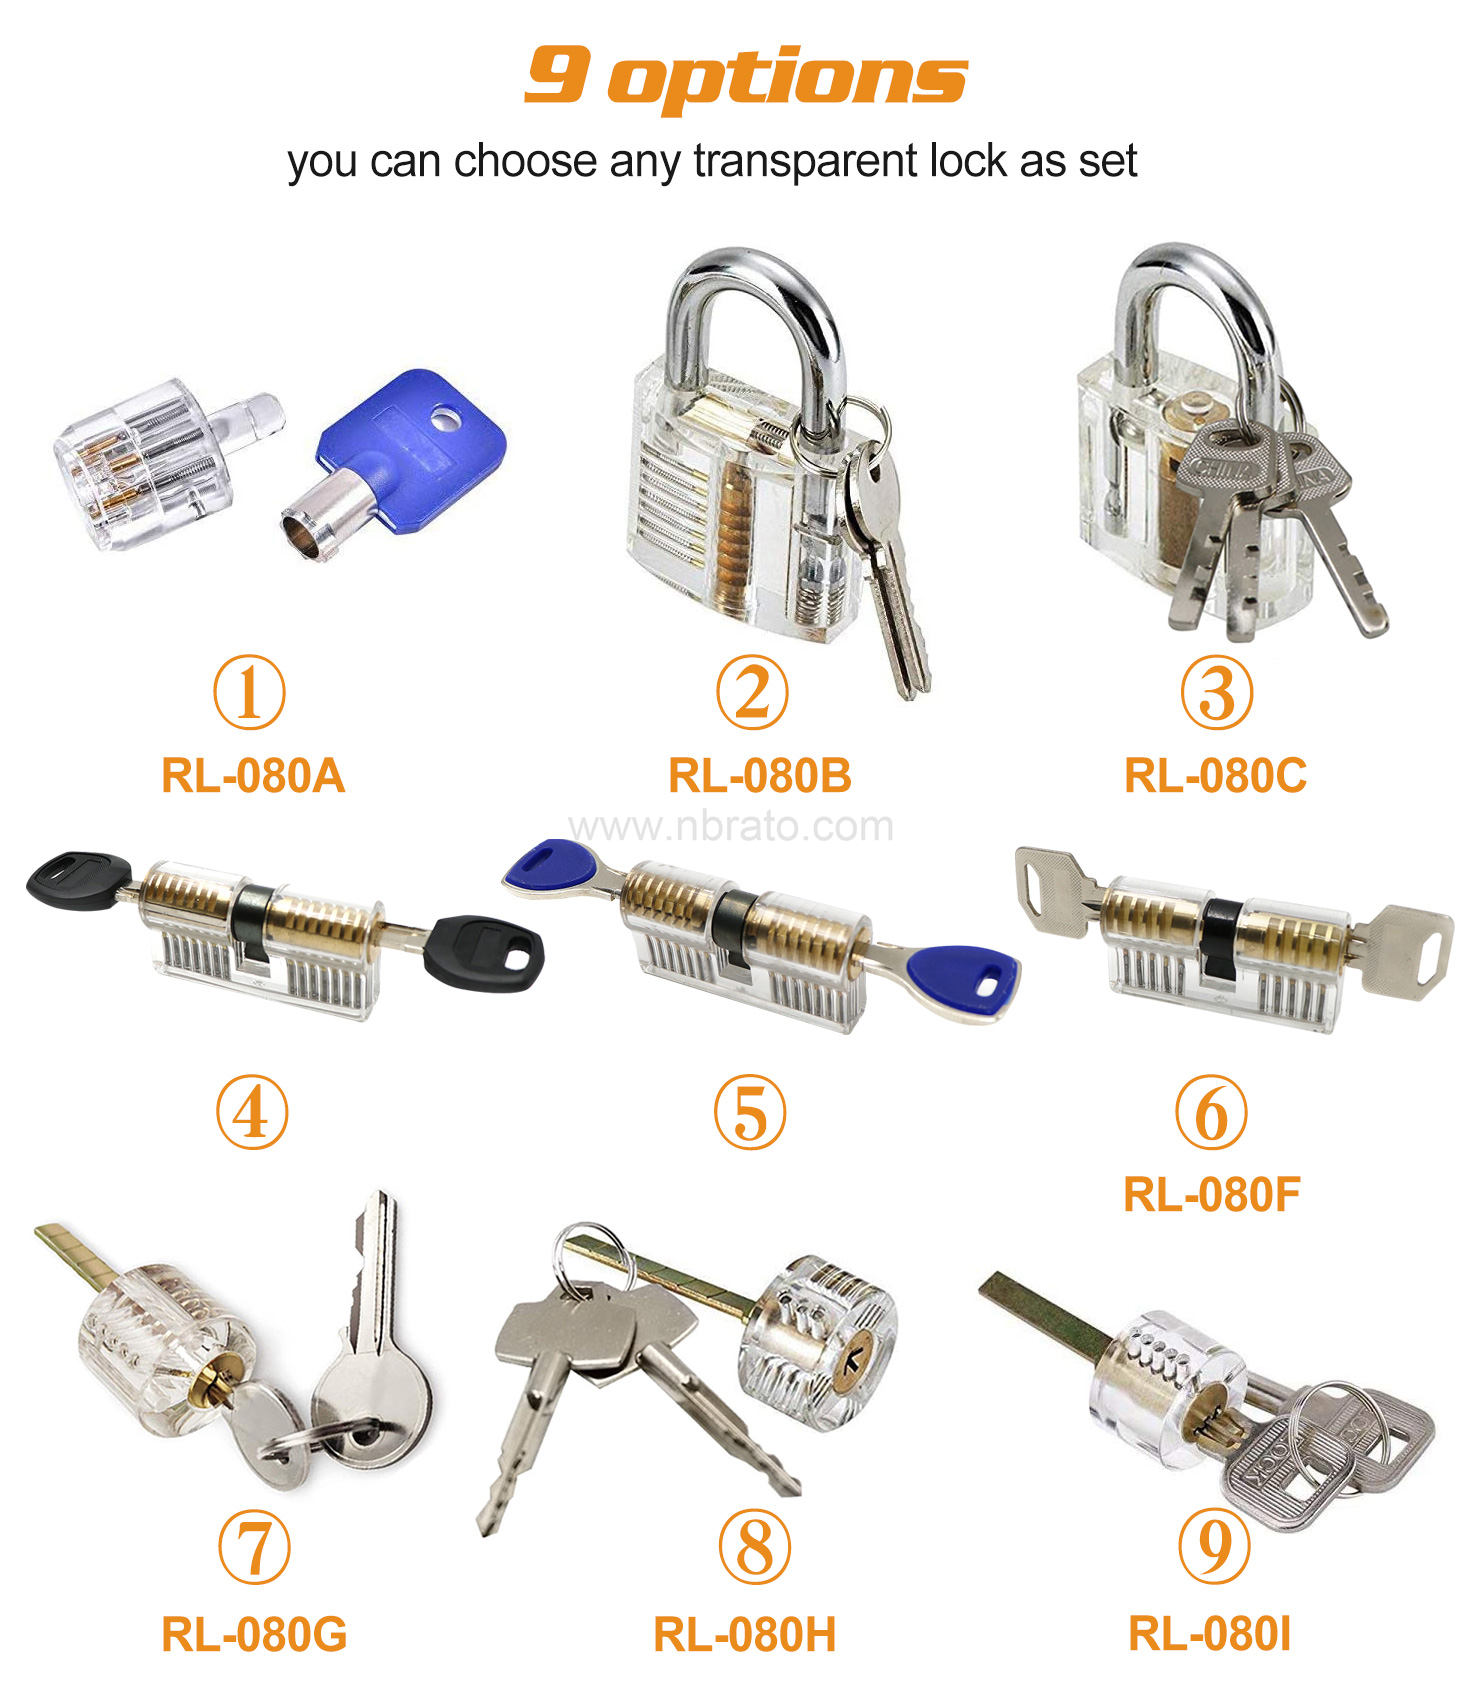 6-Piece Practice Lock Set for Beginner and Pro Locksmiths Transparent Padlock Training Tool